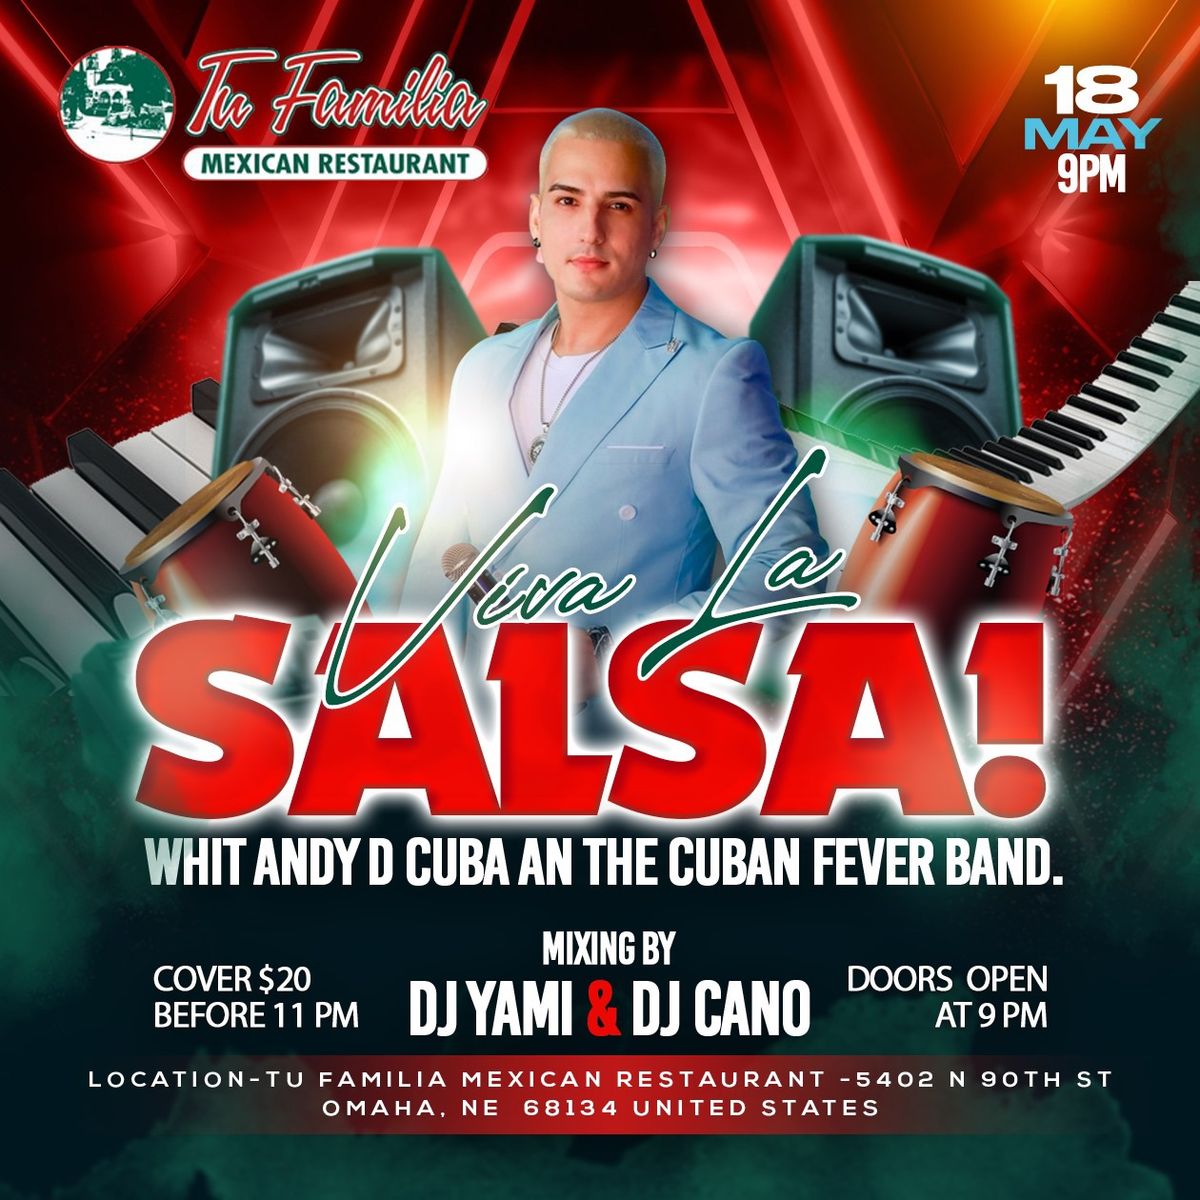 !Viva la Salsa ! Dance party and live music band. 